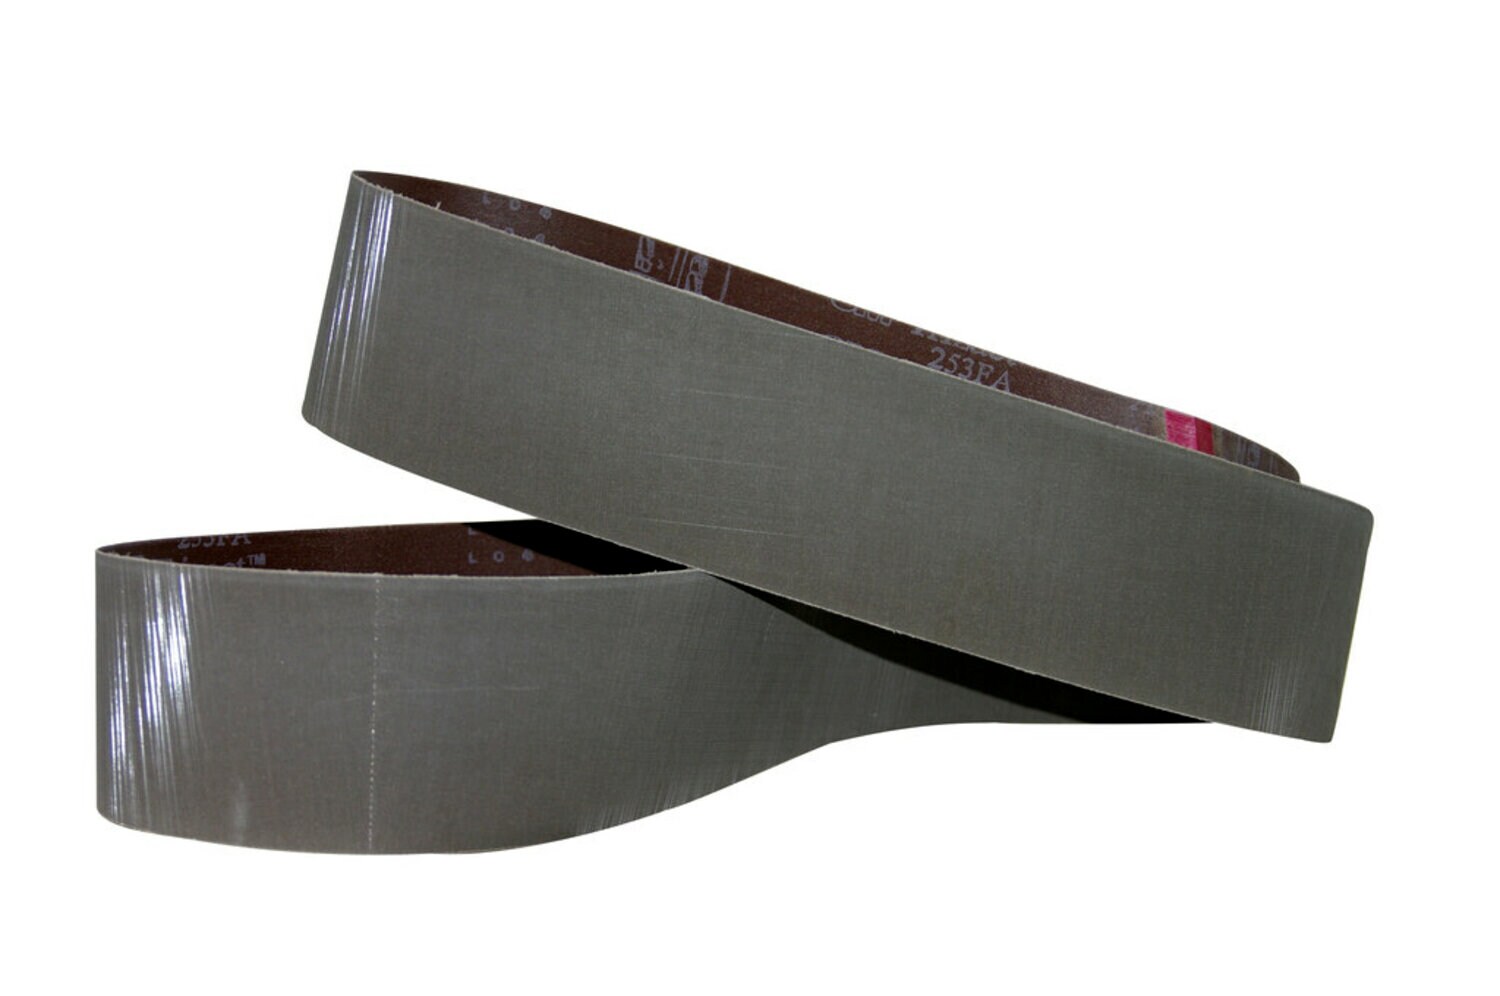 7010308273 - 3M Trizact Cloth Belt 253FA, A80 XF-weight, 12 in x 126 in, Film-lok,
Full-flex, 10 ea/Case